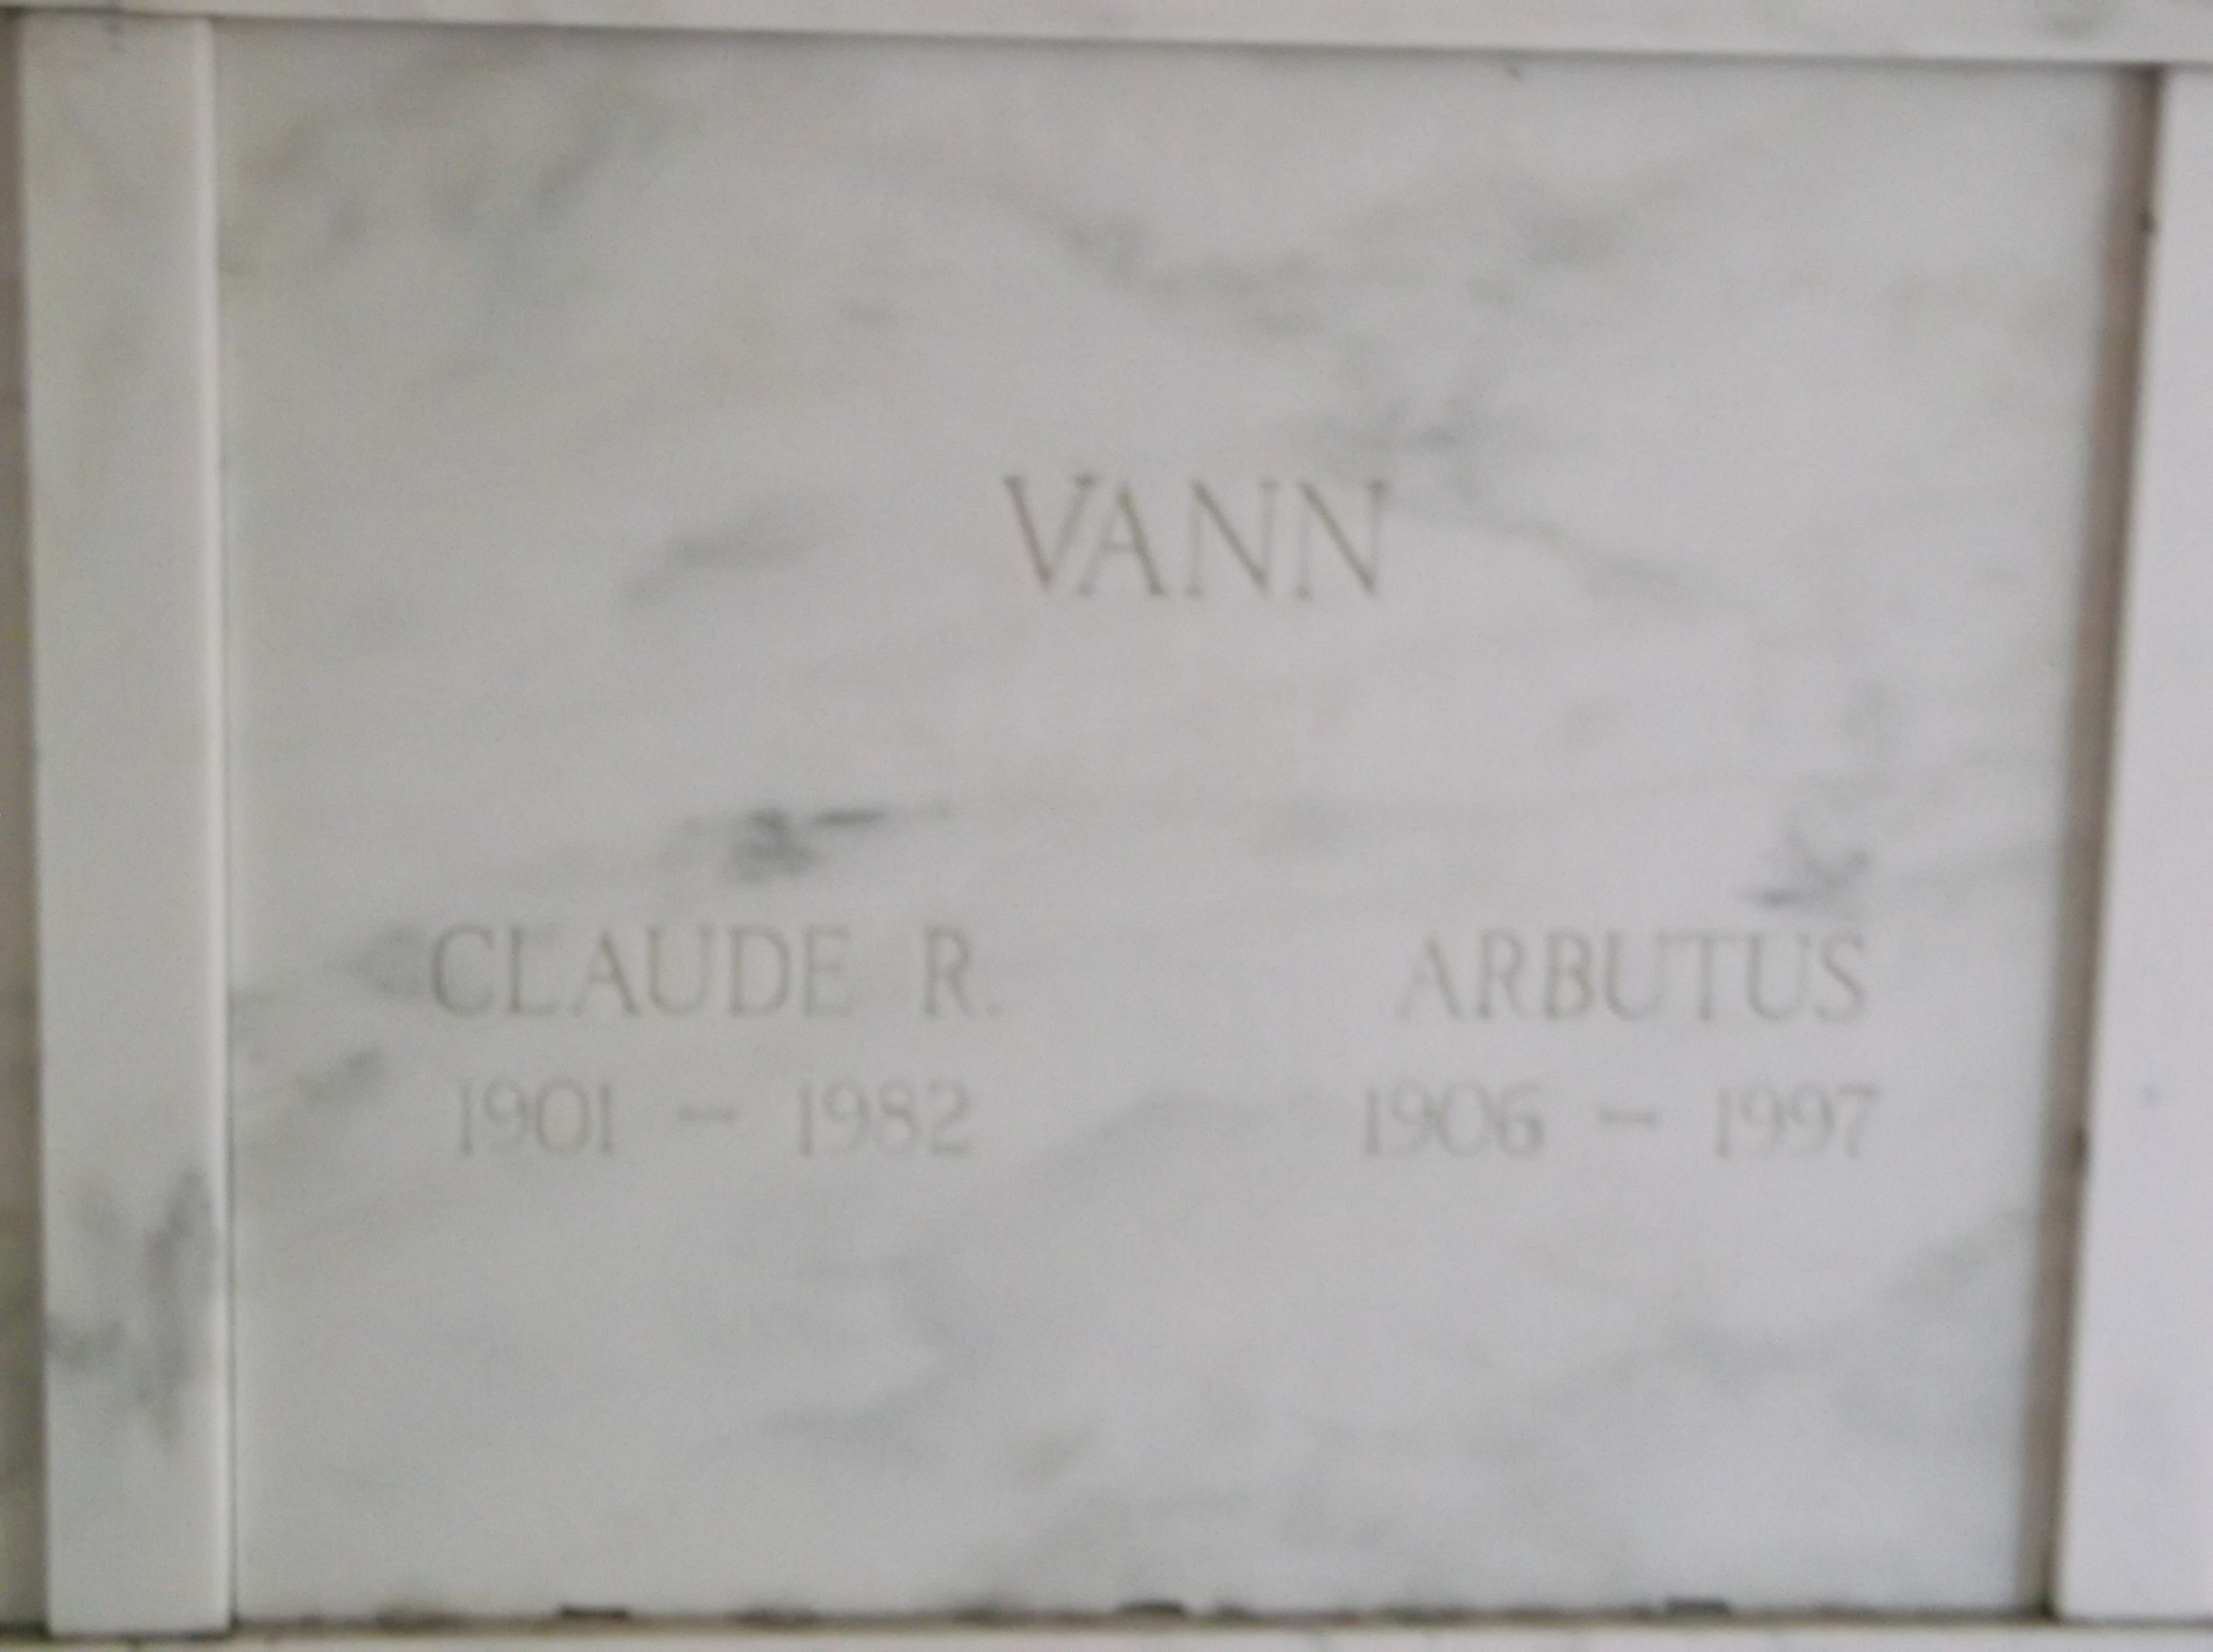 Claude R Vann